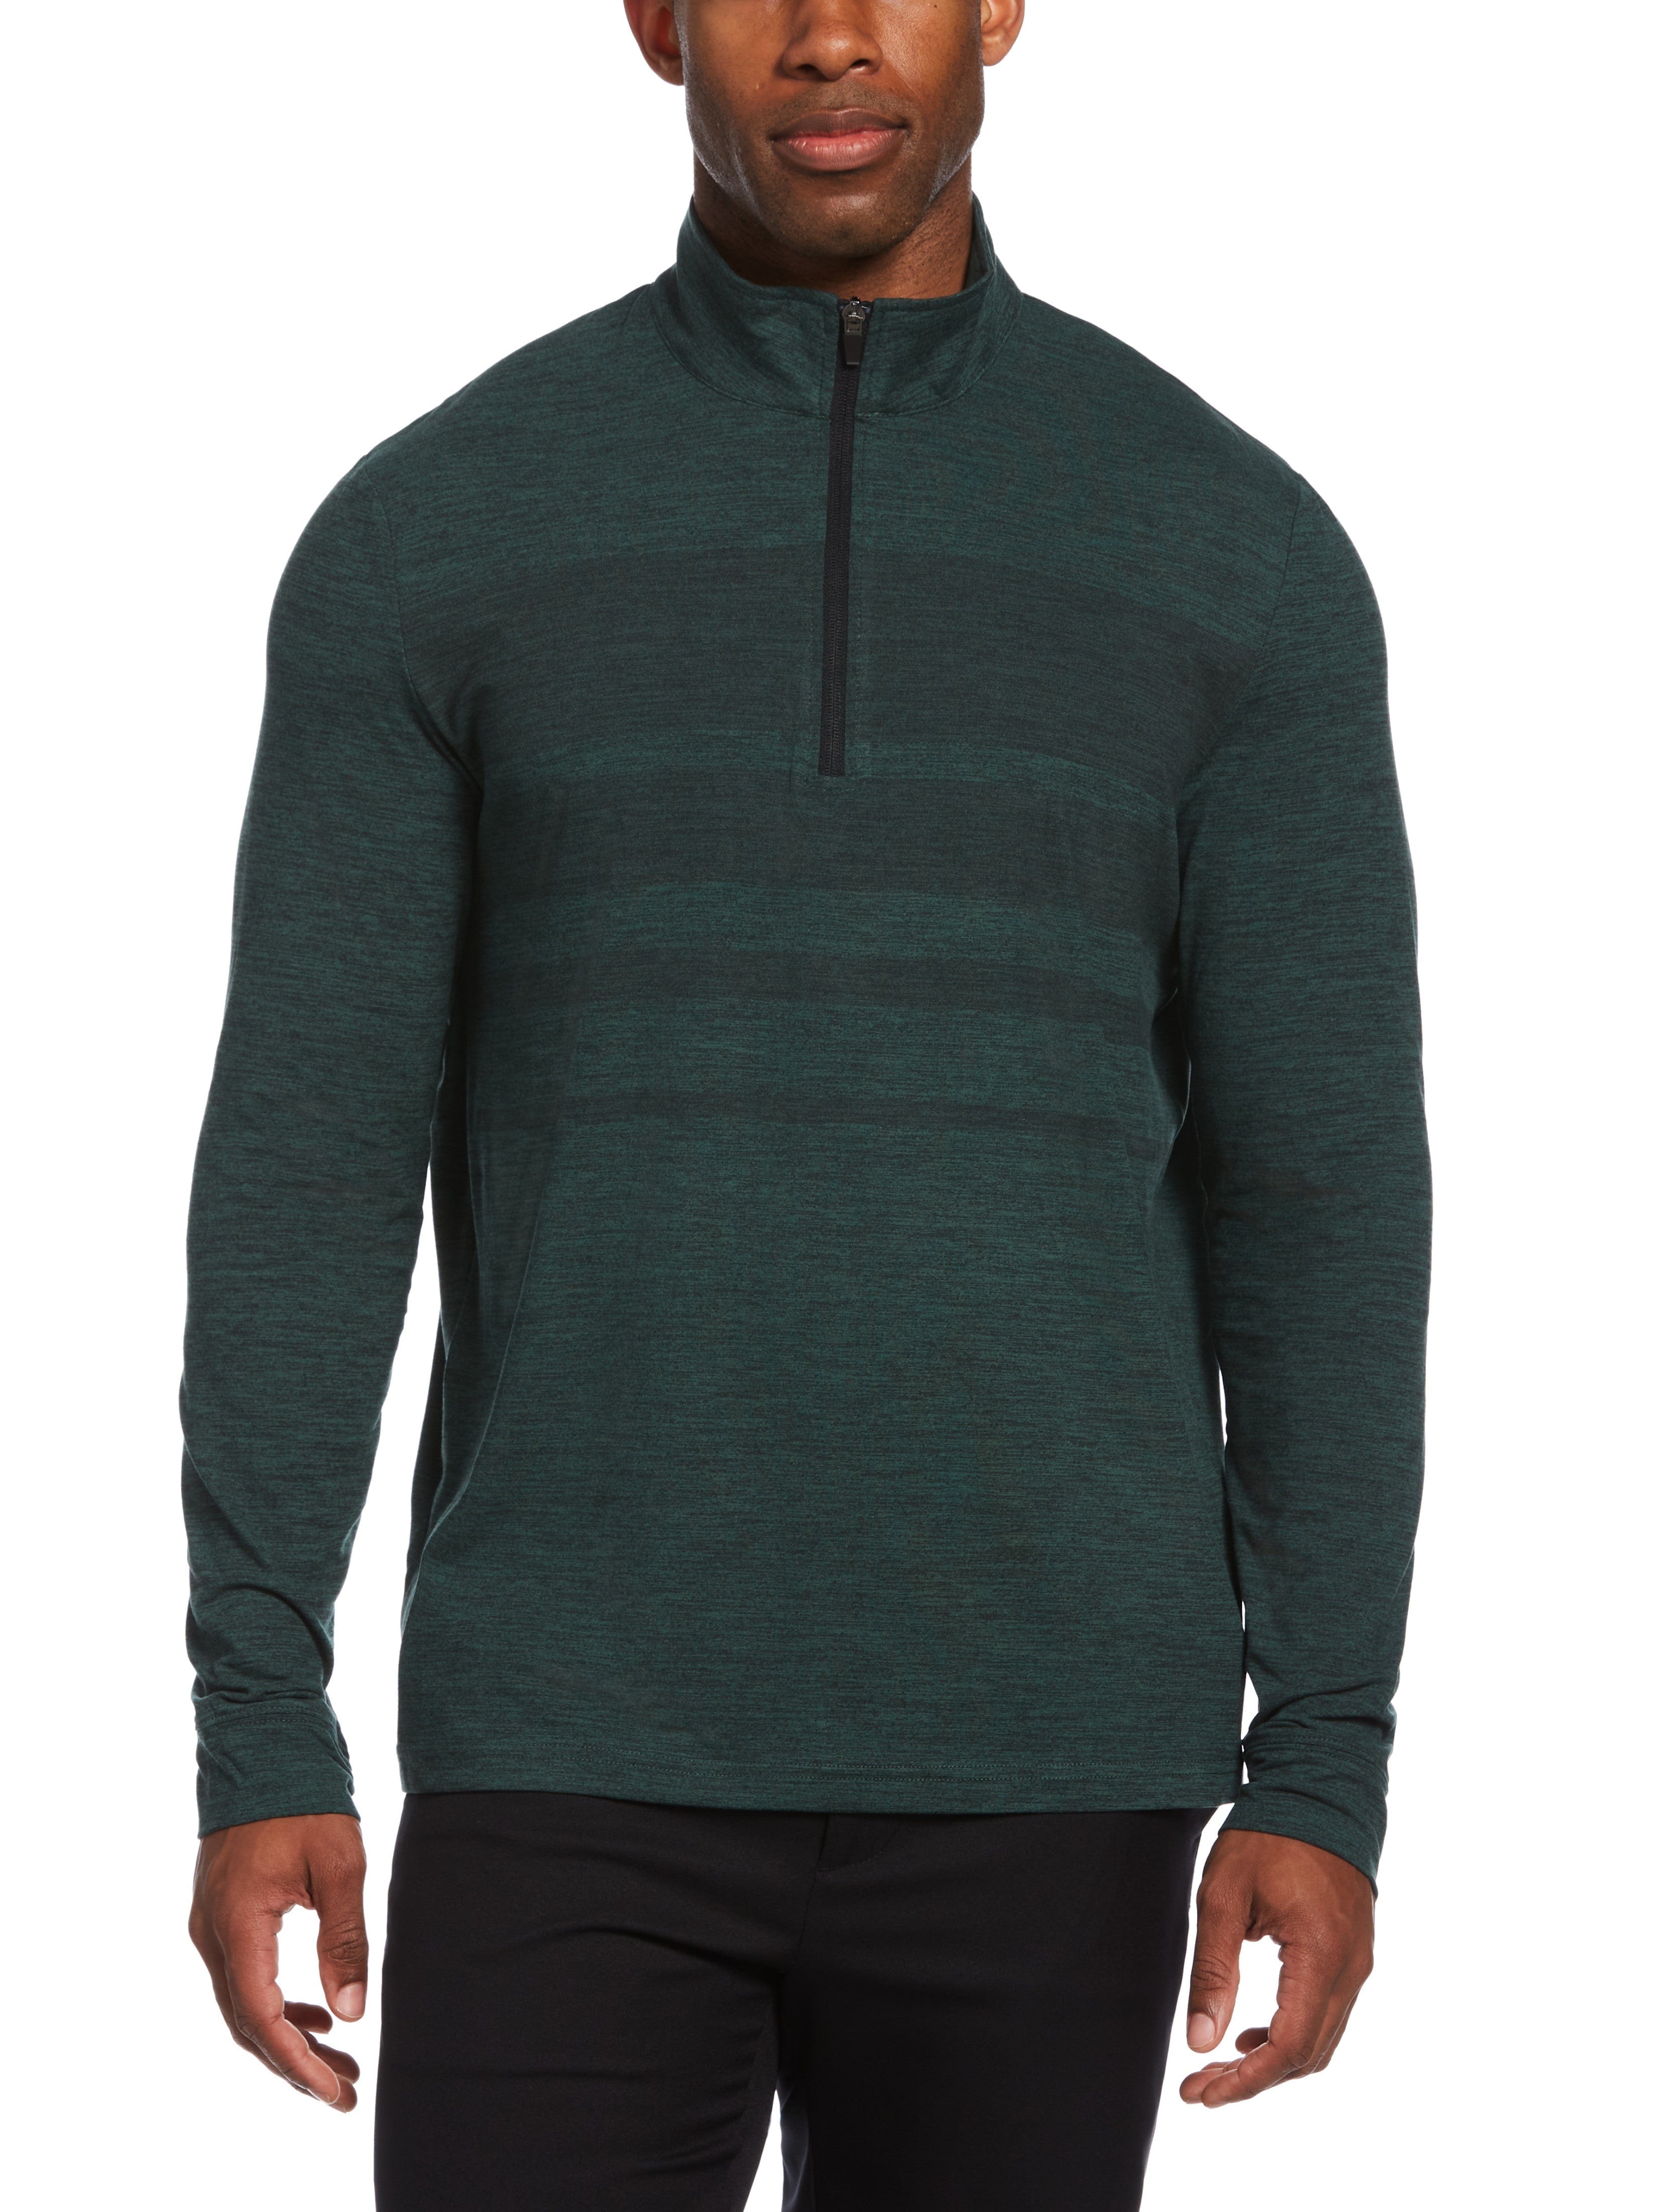 Levelwear Men's 1/4 Zip Pullover (Green) • North Swing Golf Lounge